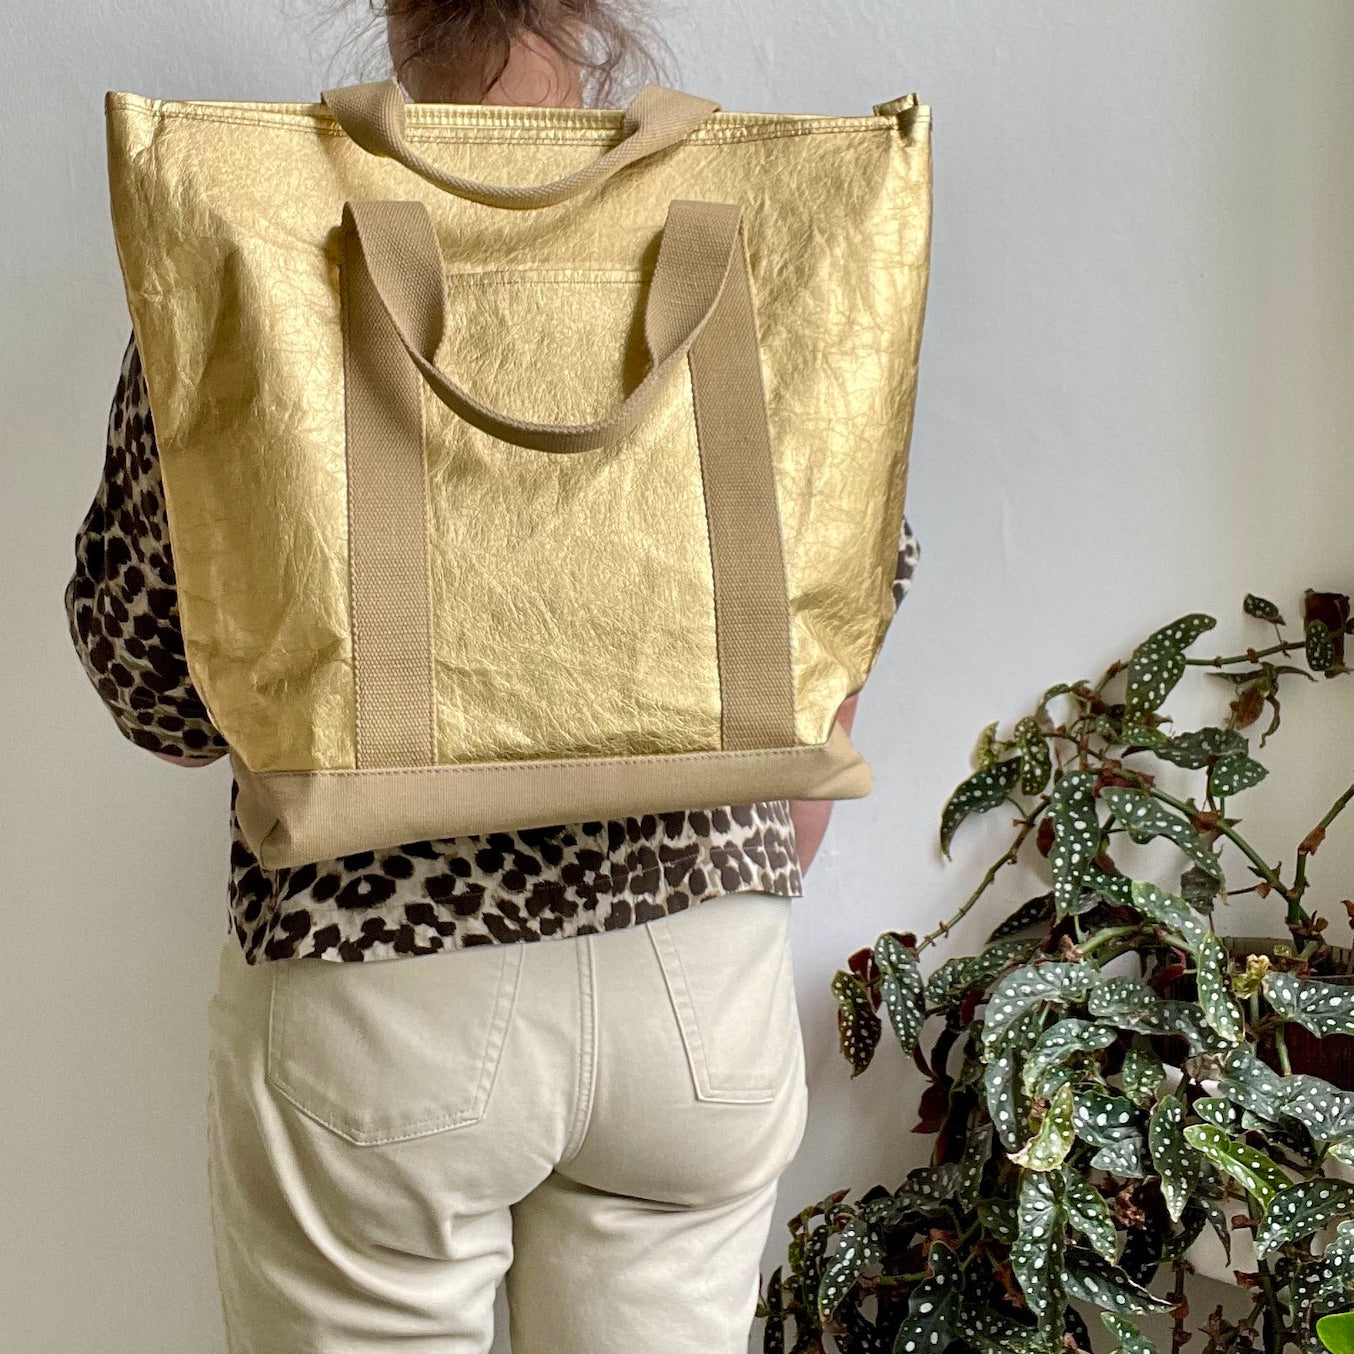 Gold backpack